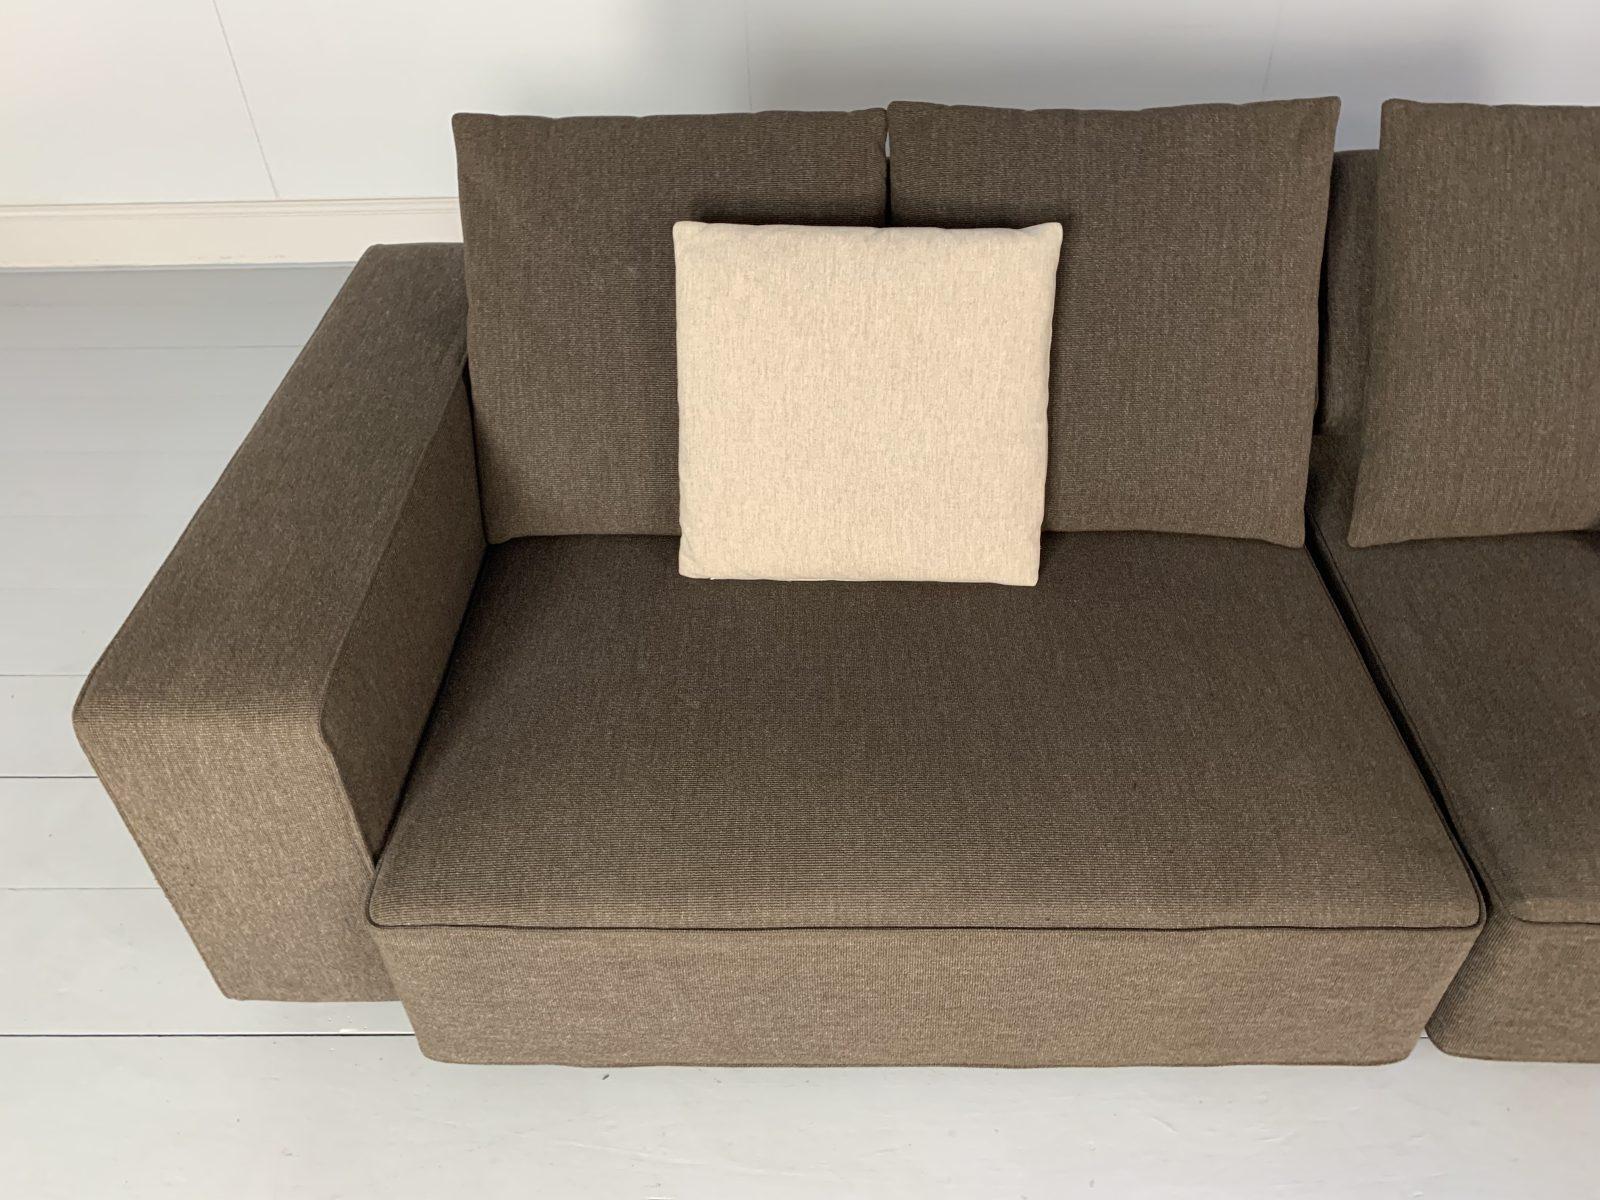 B&B Italia “Andy ’13” 2-Seat Sofa, in Dark-Brown Fabric In Good Condition For Sale In Barrowford, GB